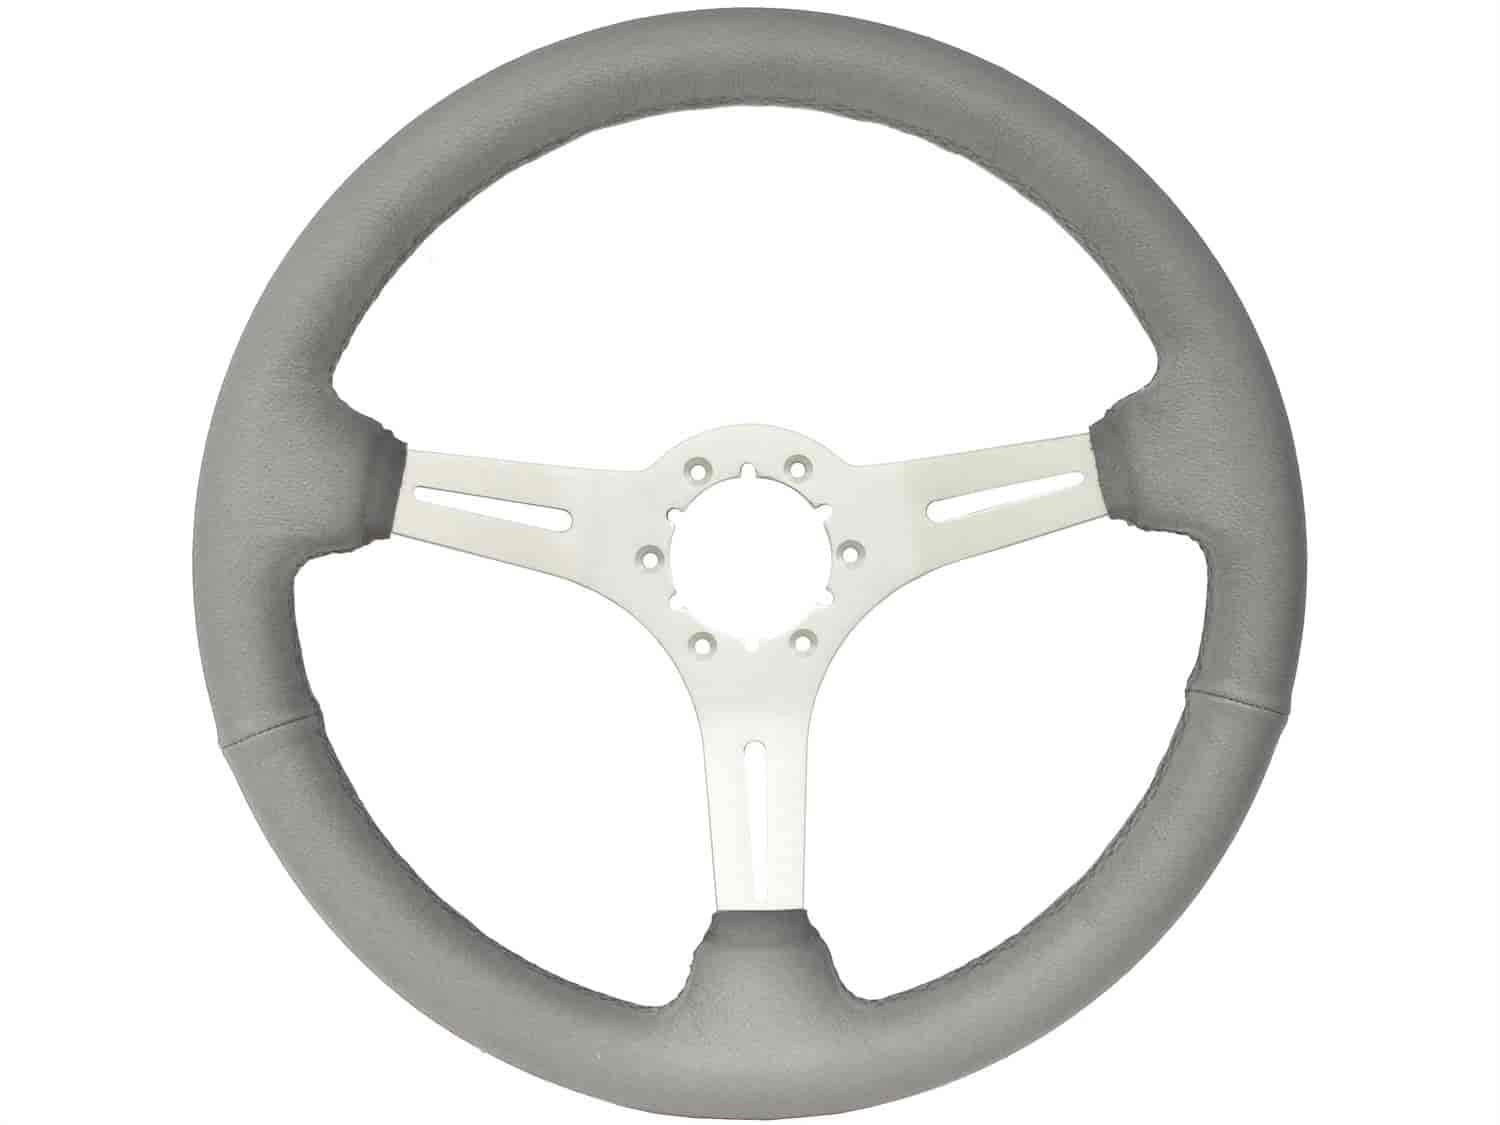 S6 Sport Steering Wheel, 14 in. Diameter, Premium